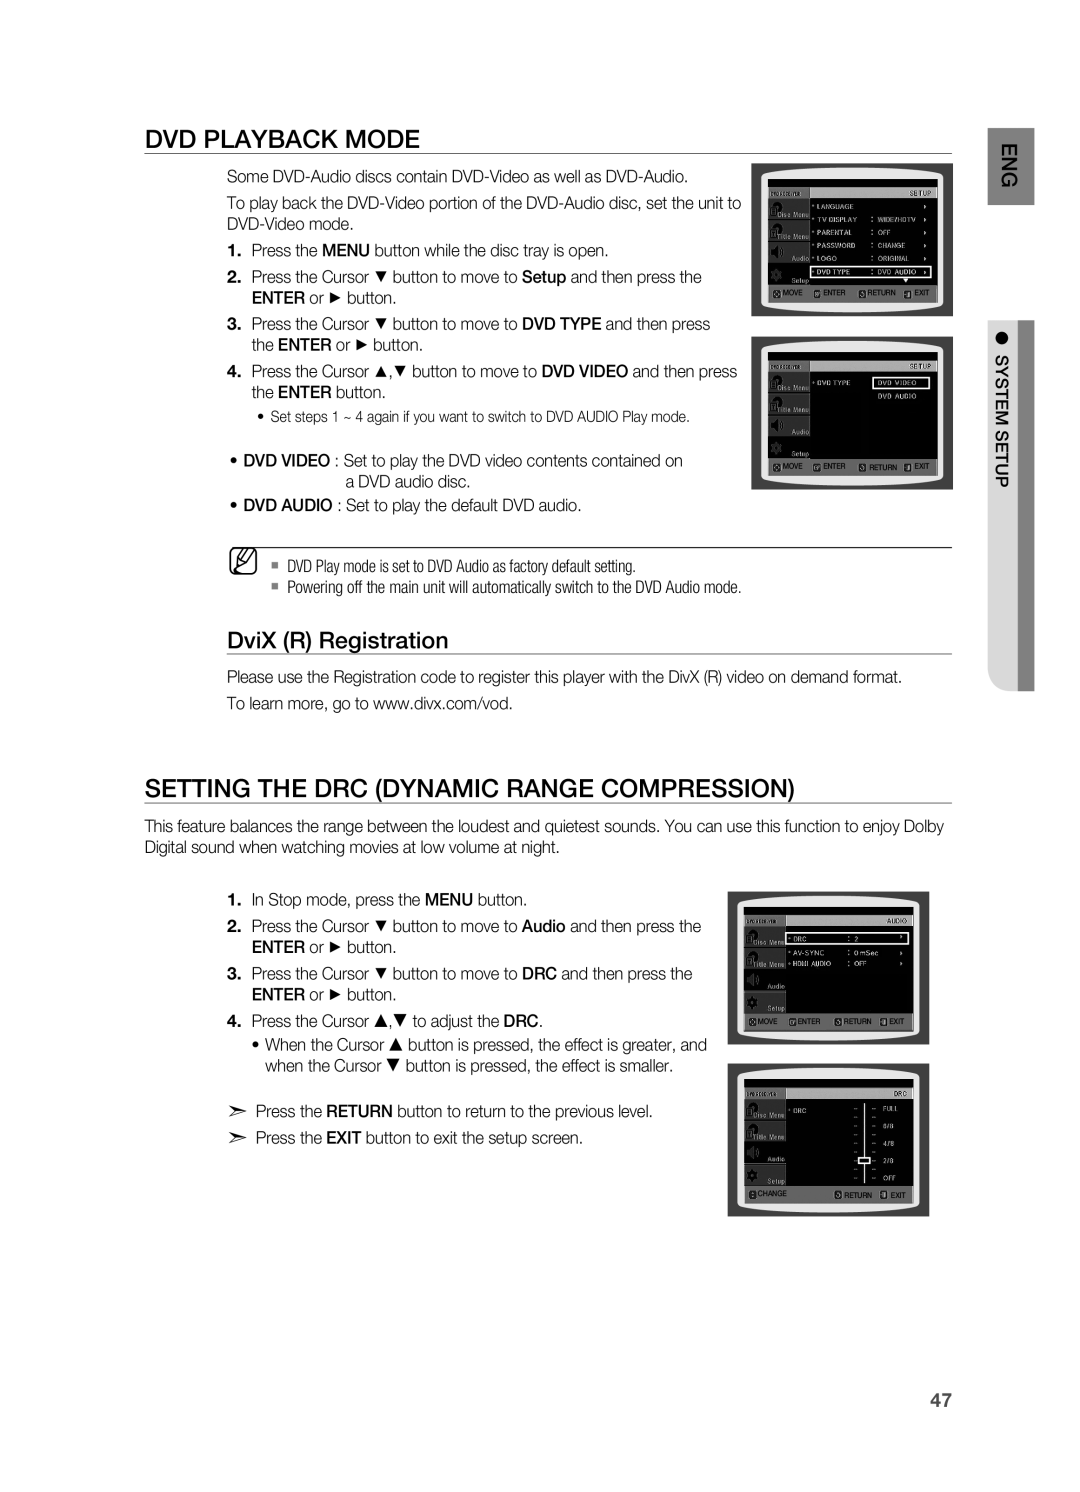 Samsung HT-X810 user manual DVD Playback Mode, Setting the DRC Dynamic Range Compression, DviX R Registration 